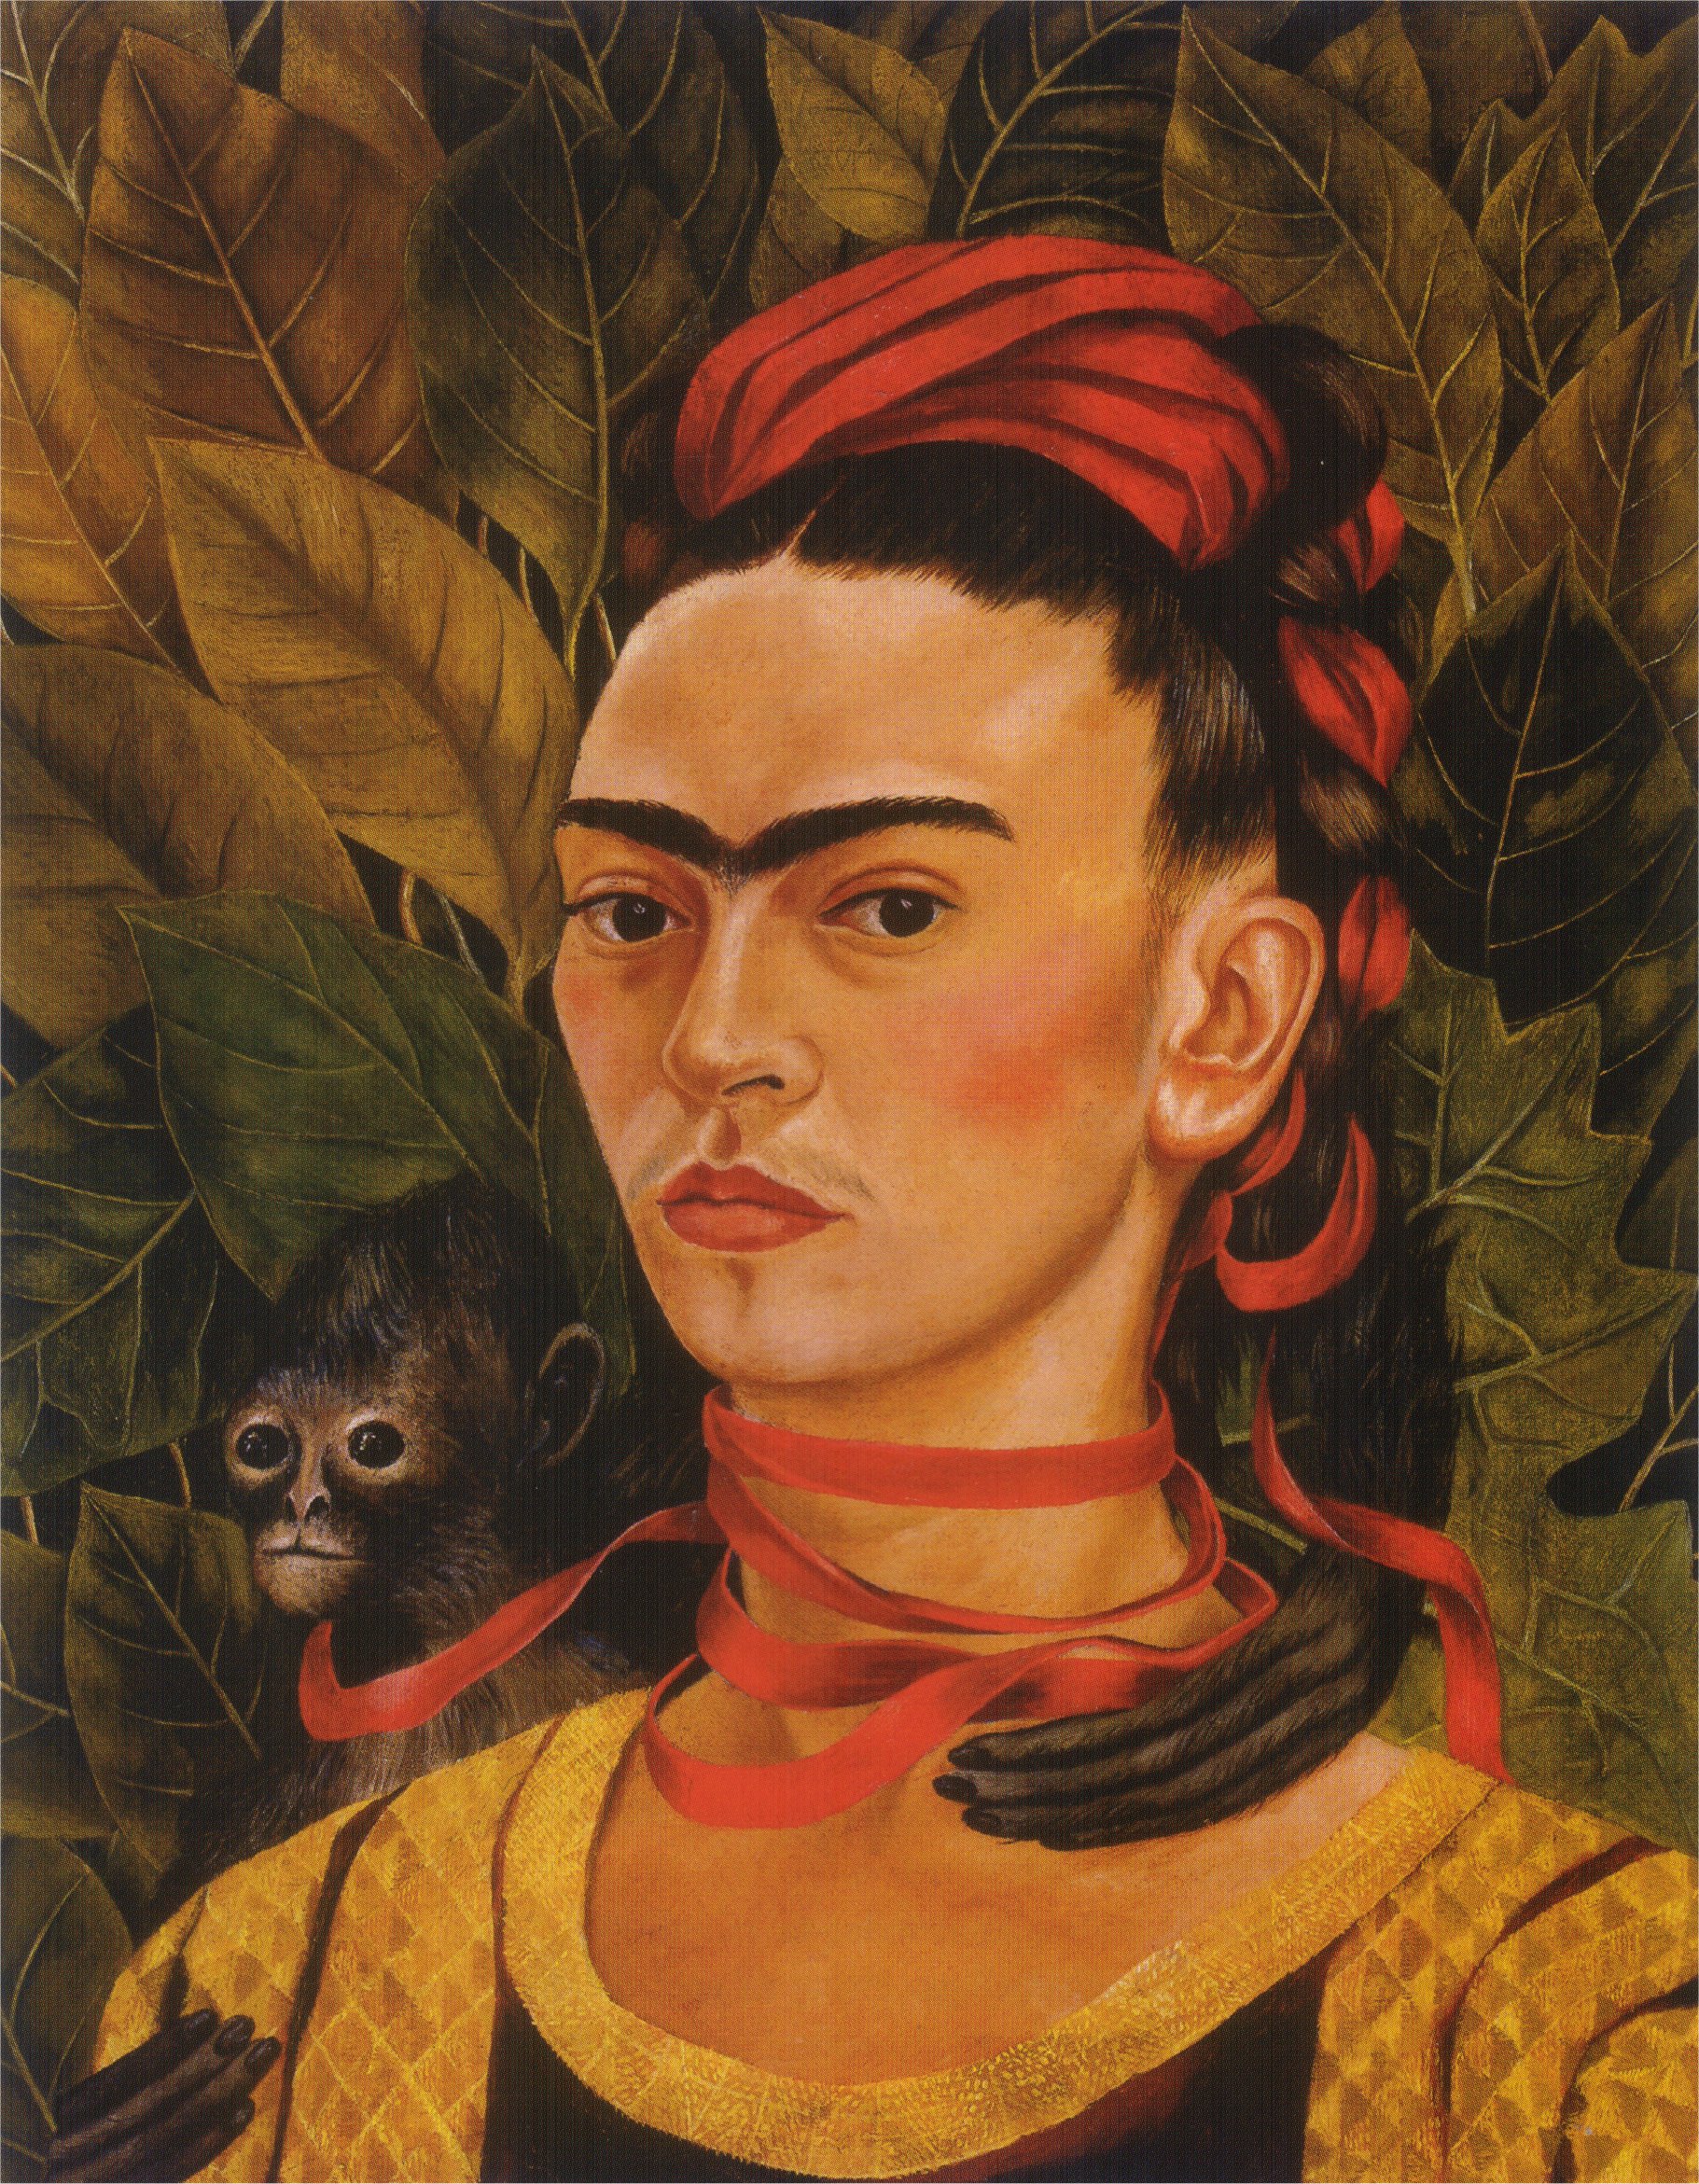 Self-portrait with Monkey by Frida Kahlo - 1938 - 40 x 30 cm Albright-Knox Art Gallery